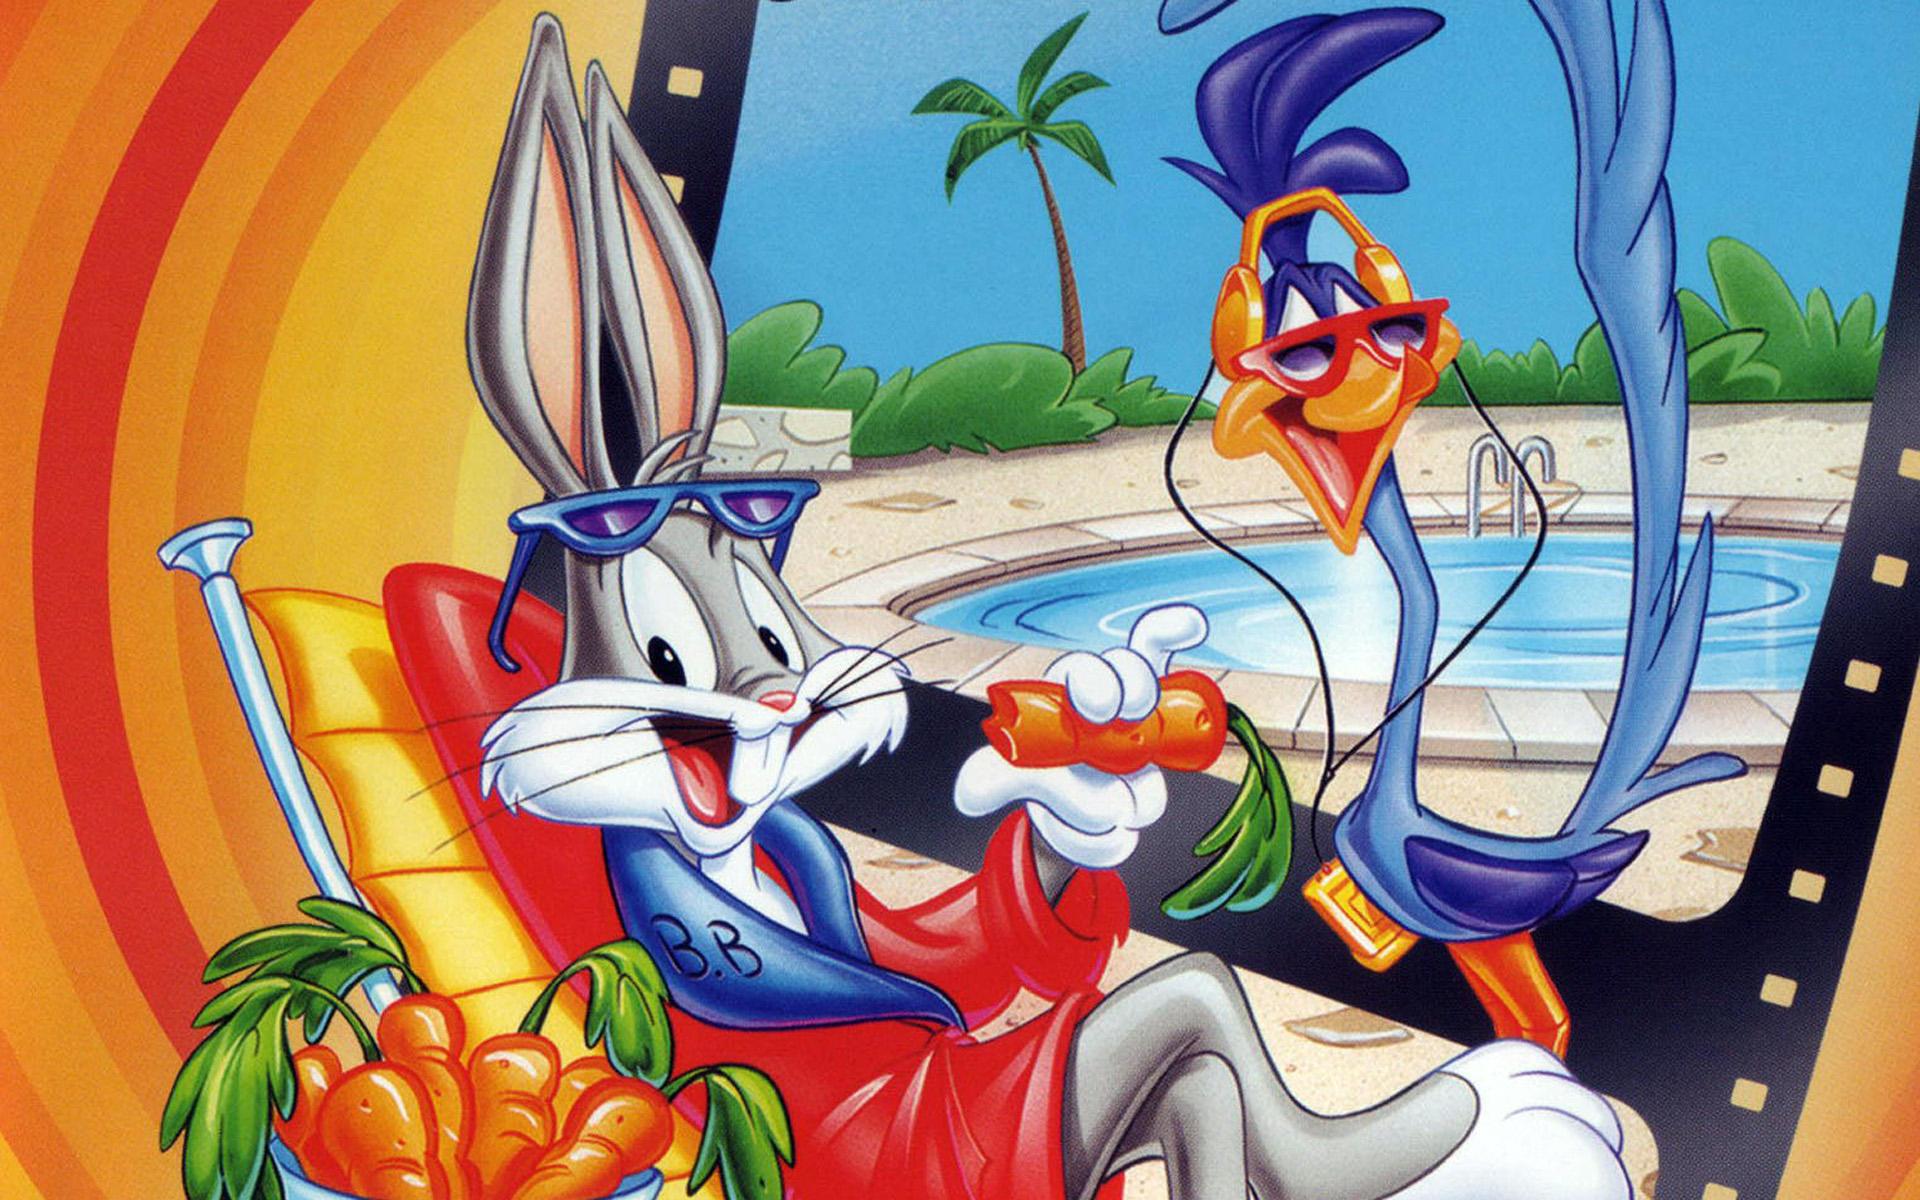 Bugs Bunny And Road Runner Cartoon Wallpaper Widescreen Hd 1920x1200